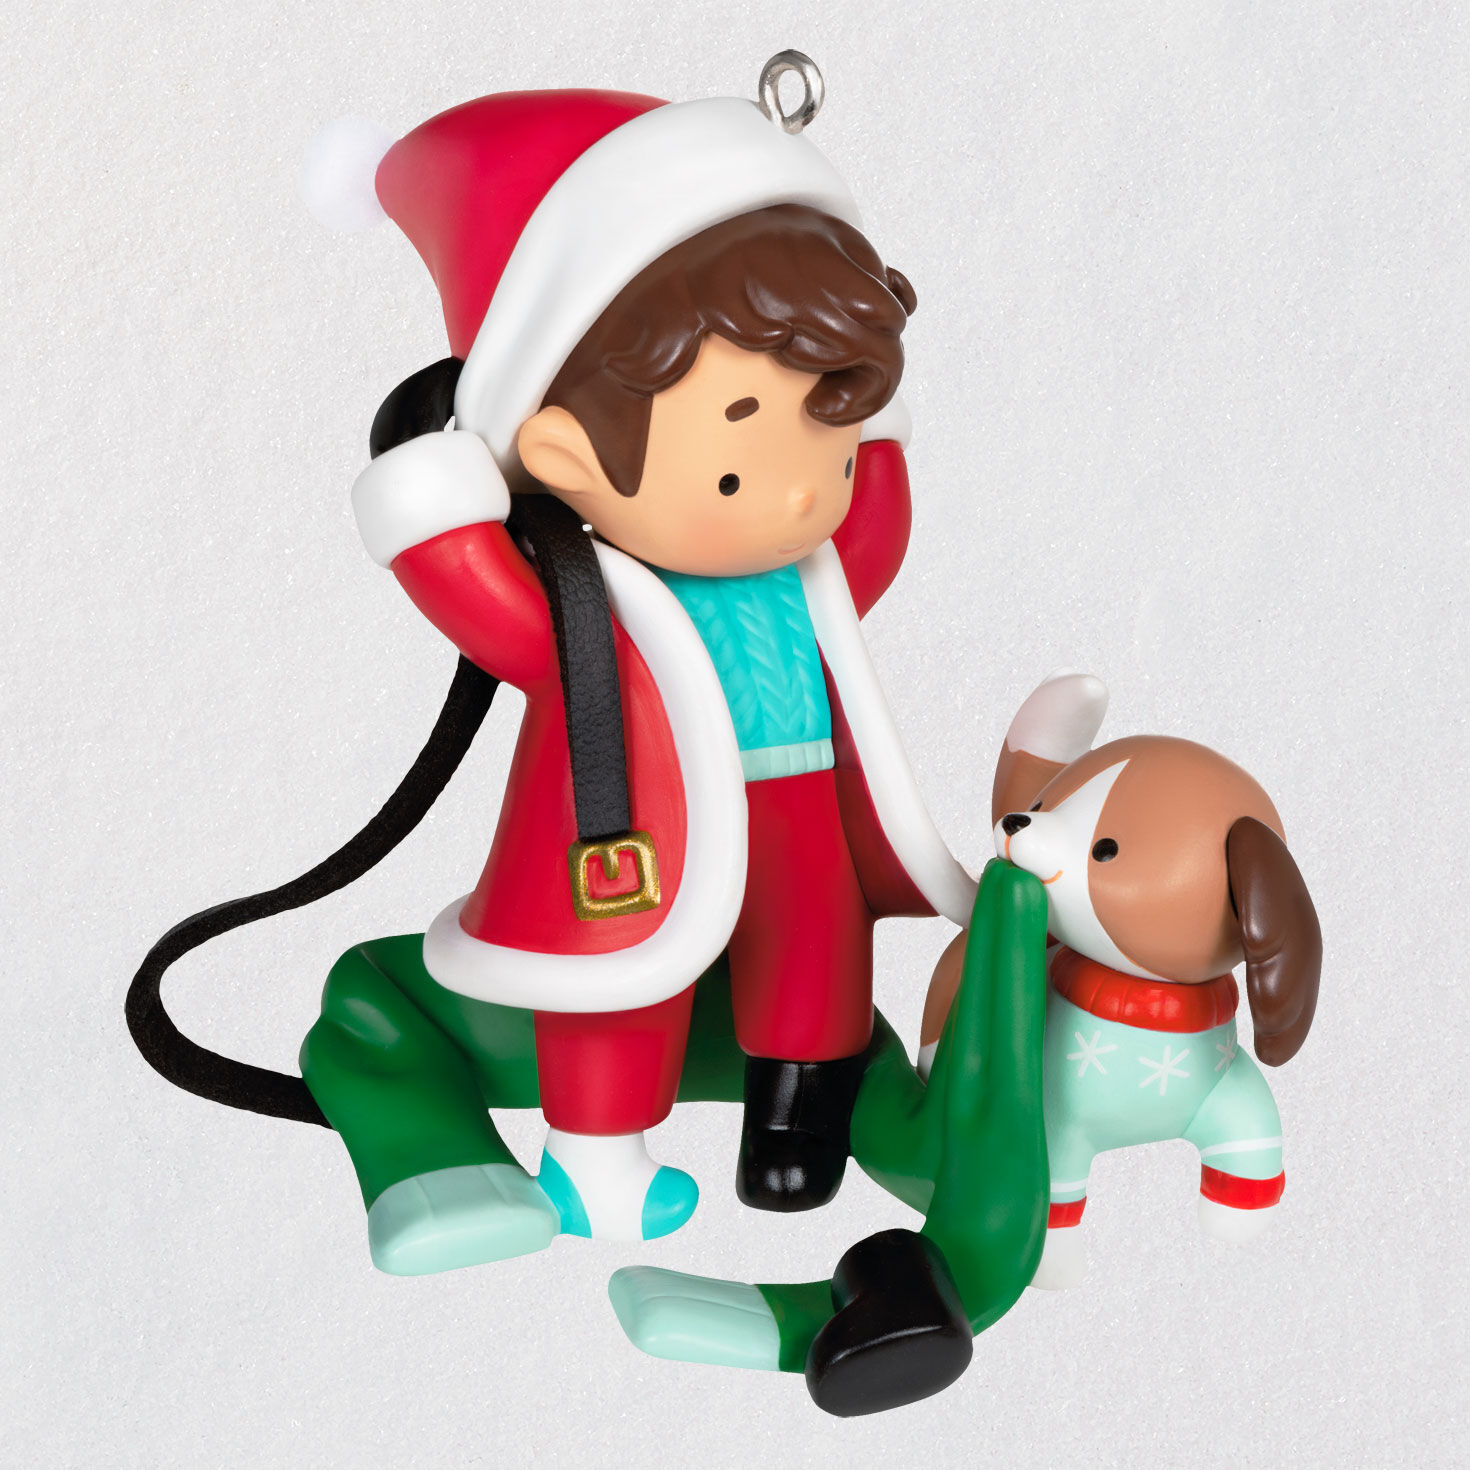 Hallmark Ornament Miniature Santa's Favorite Drink 2015 Qxm8529 for sale online 